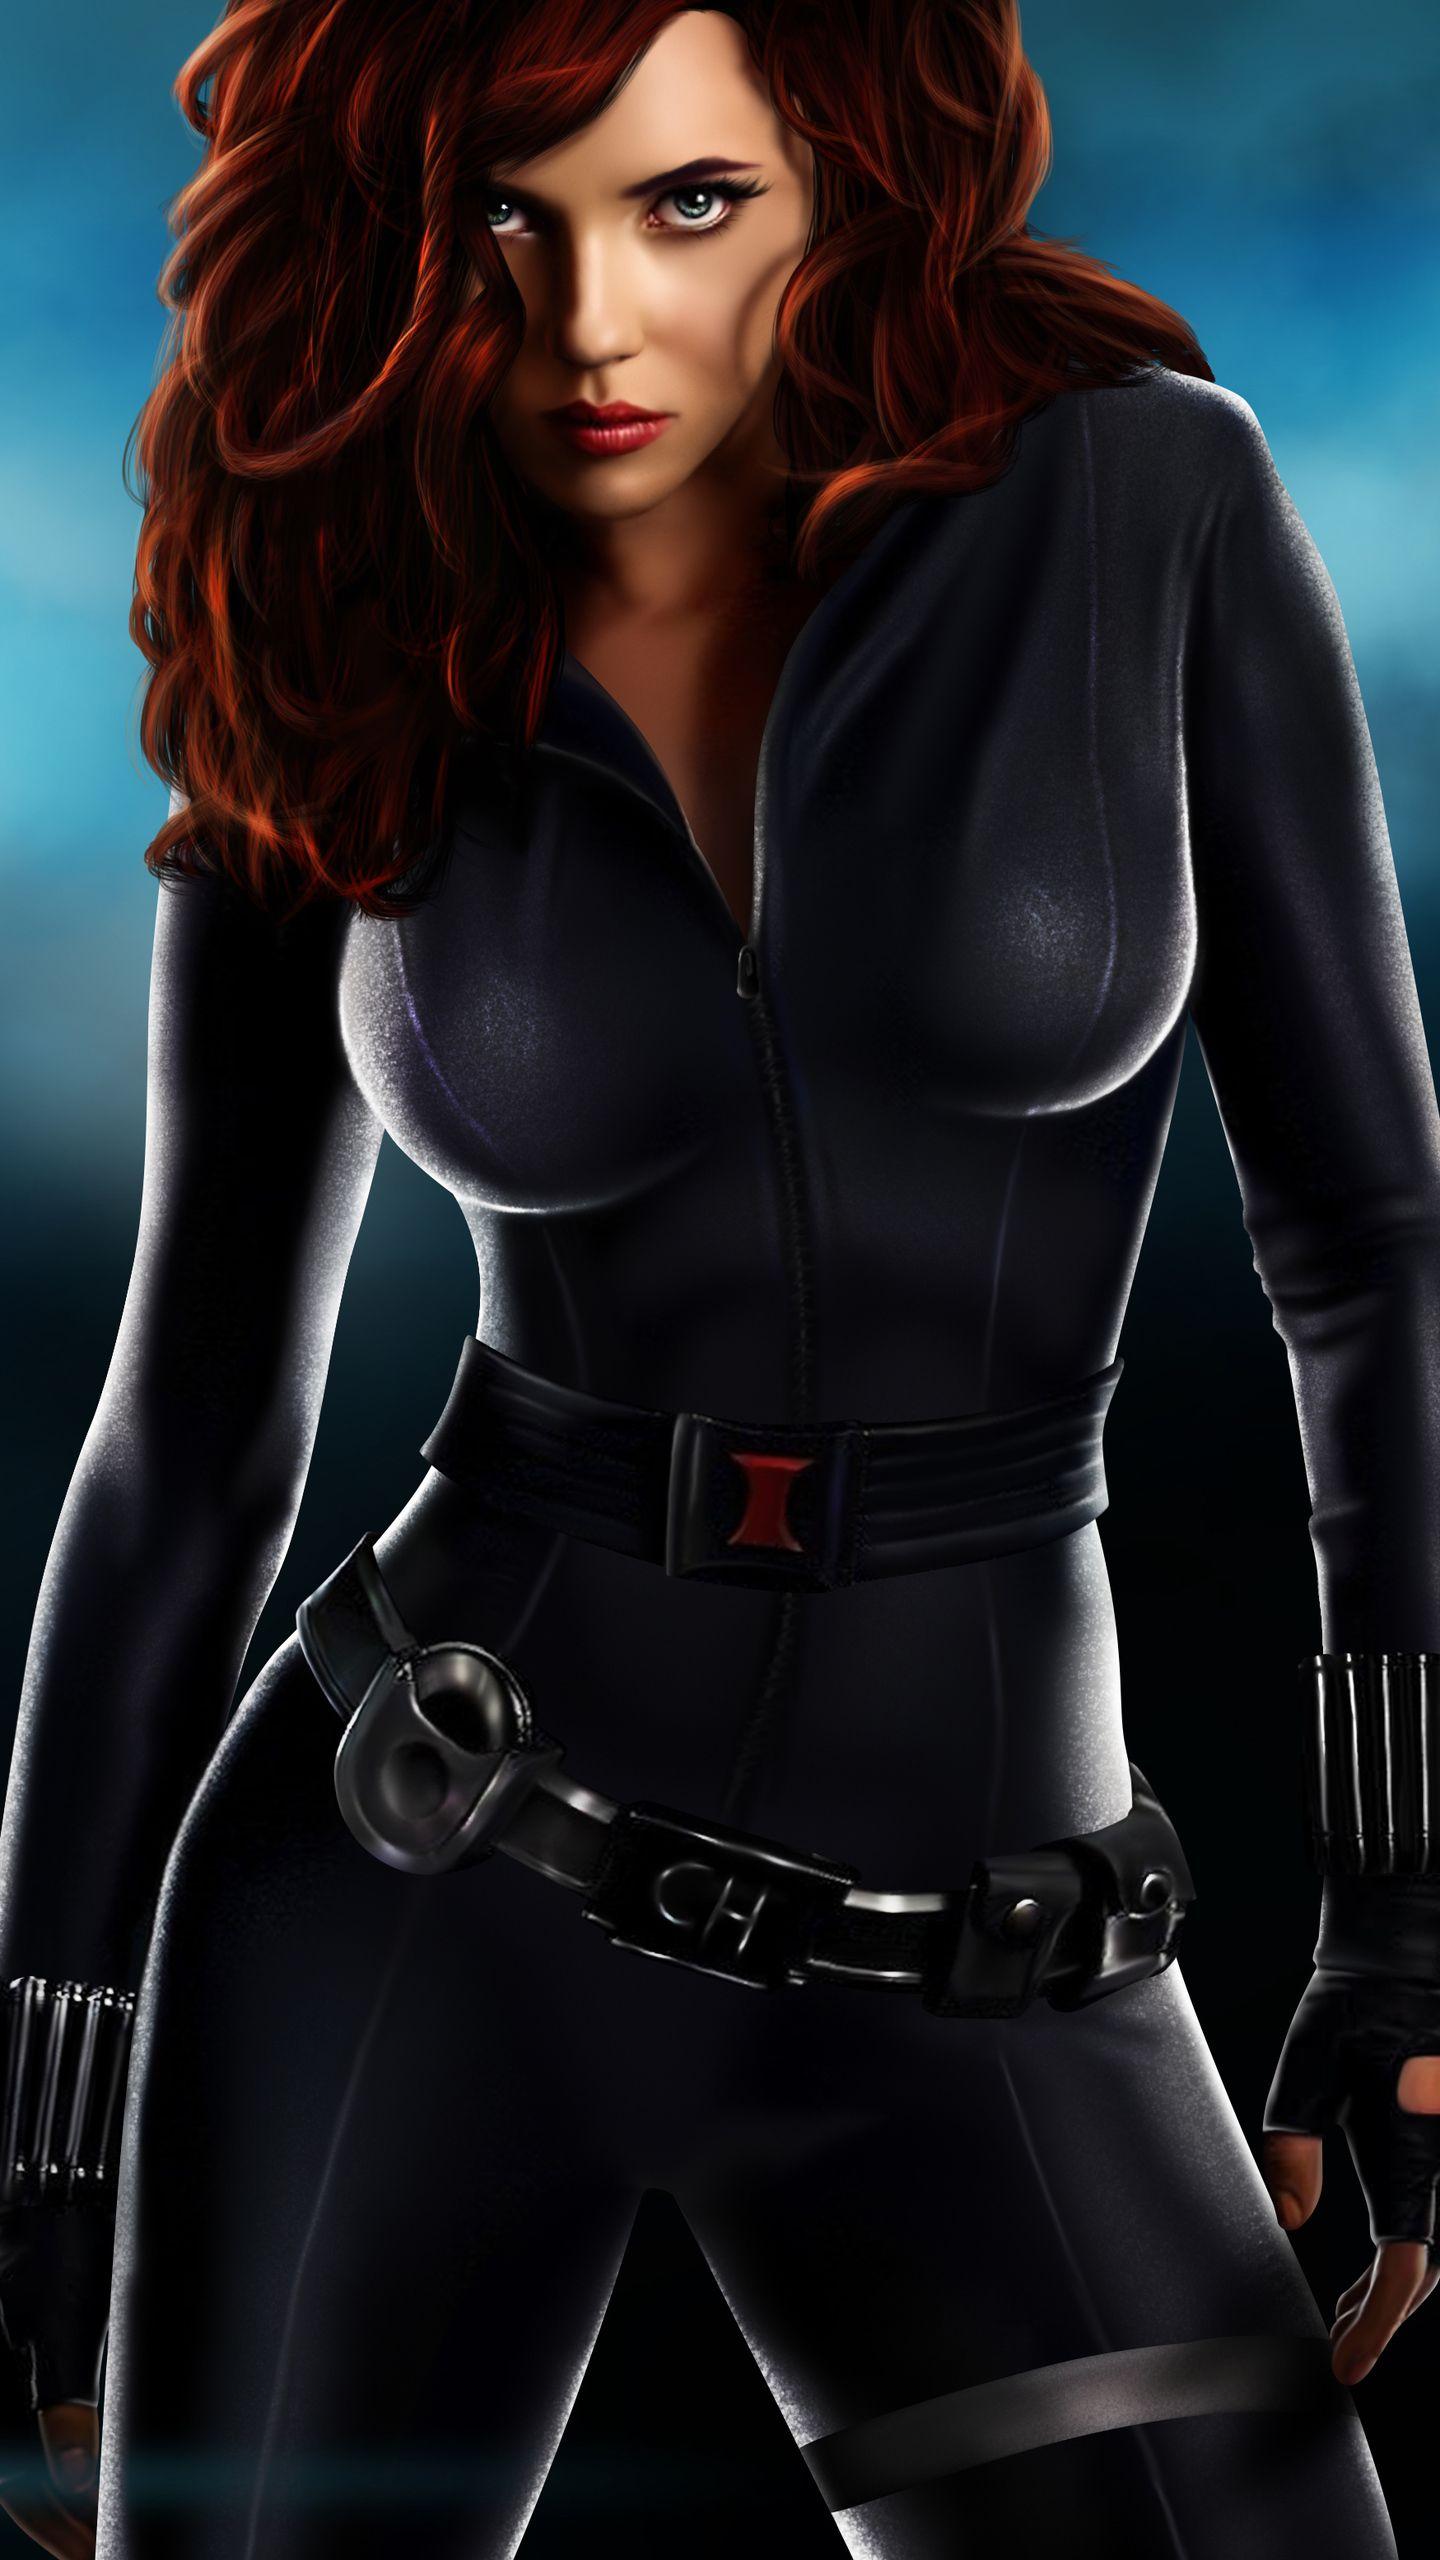 Black Widow Scarlett Johansson 2020 Wallpapers - Wallpaper Cave